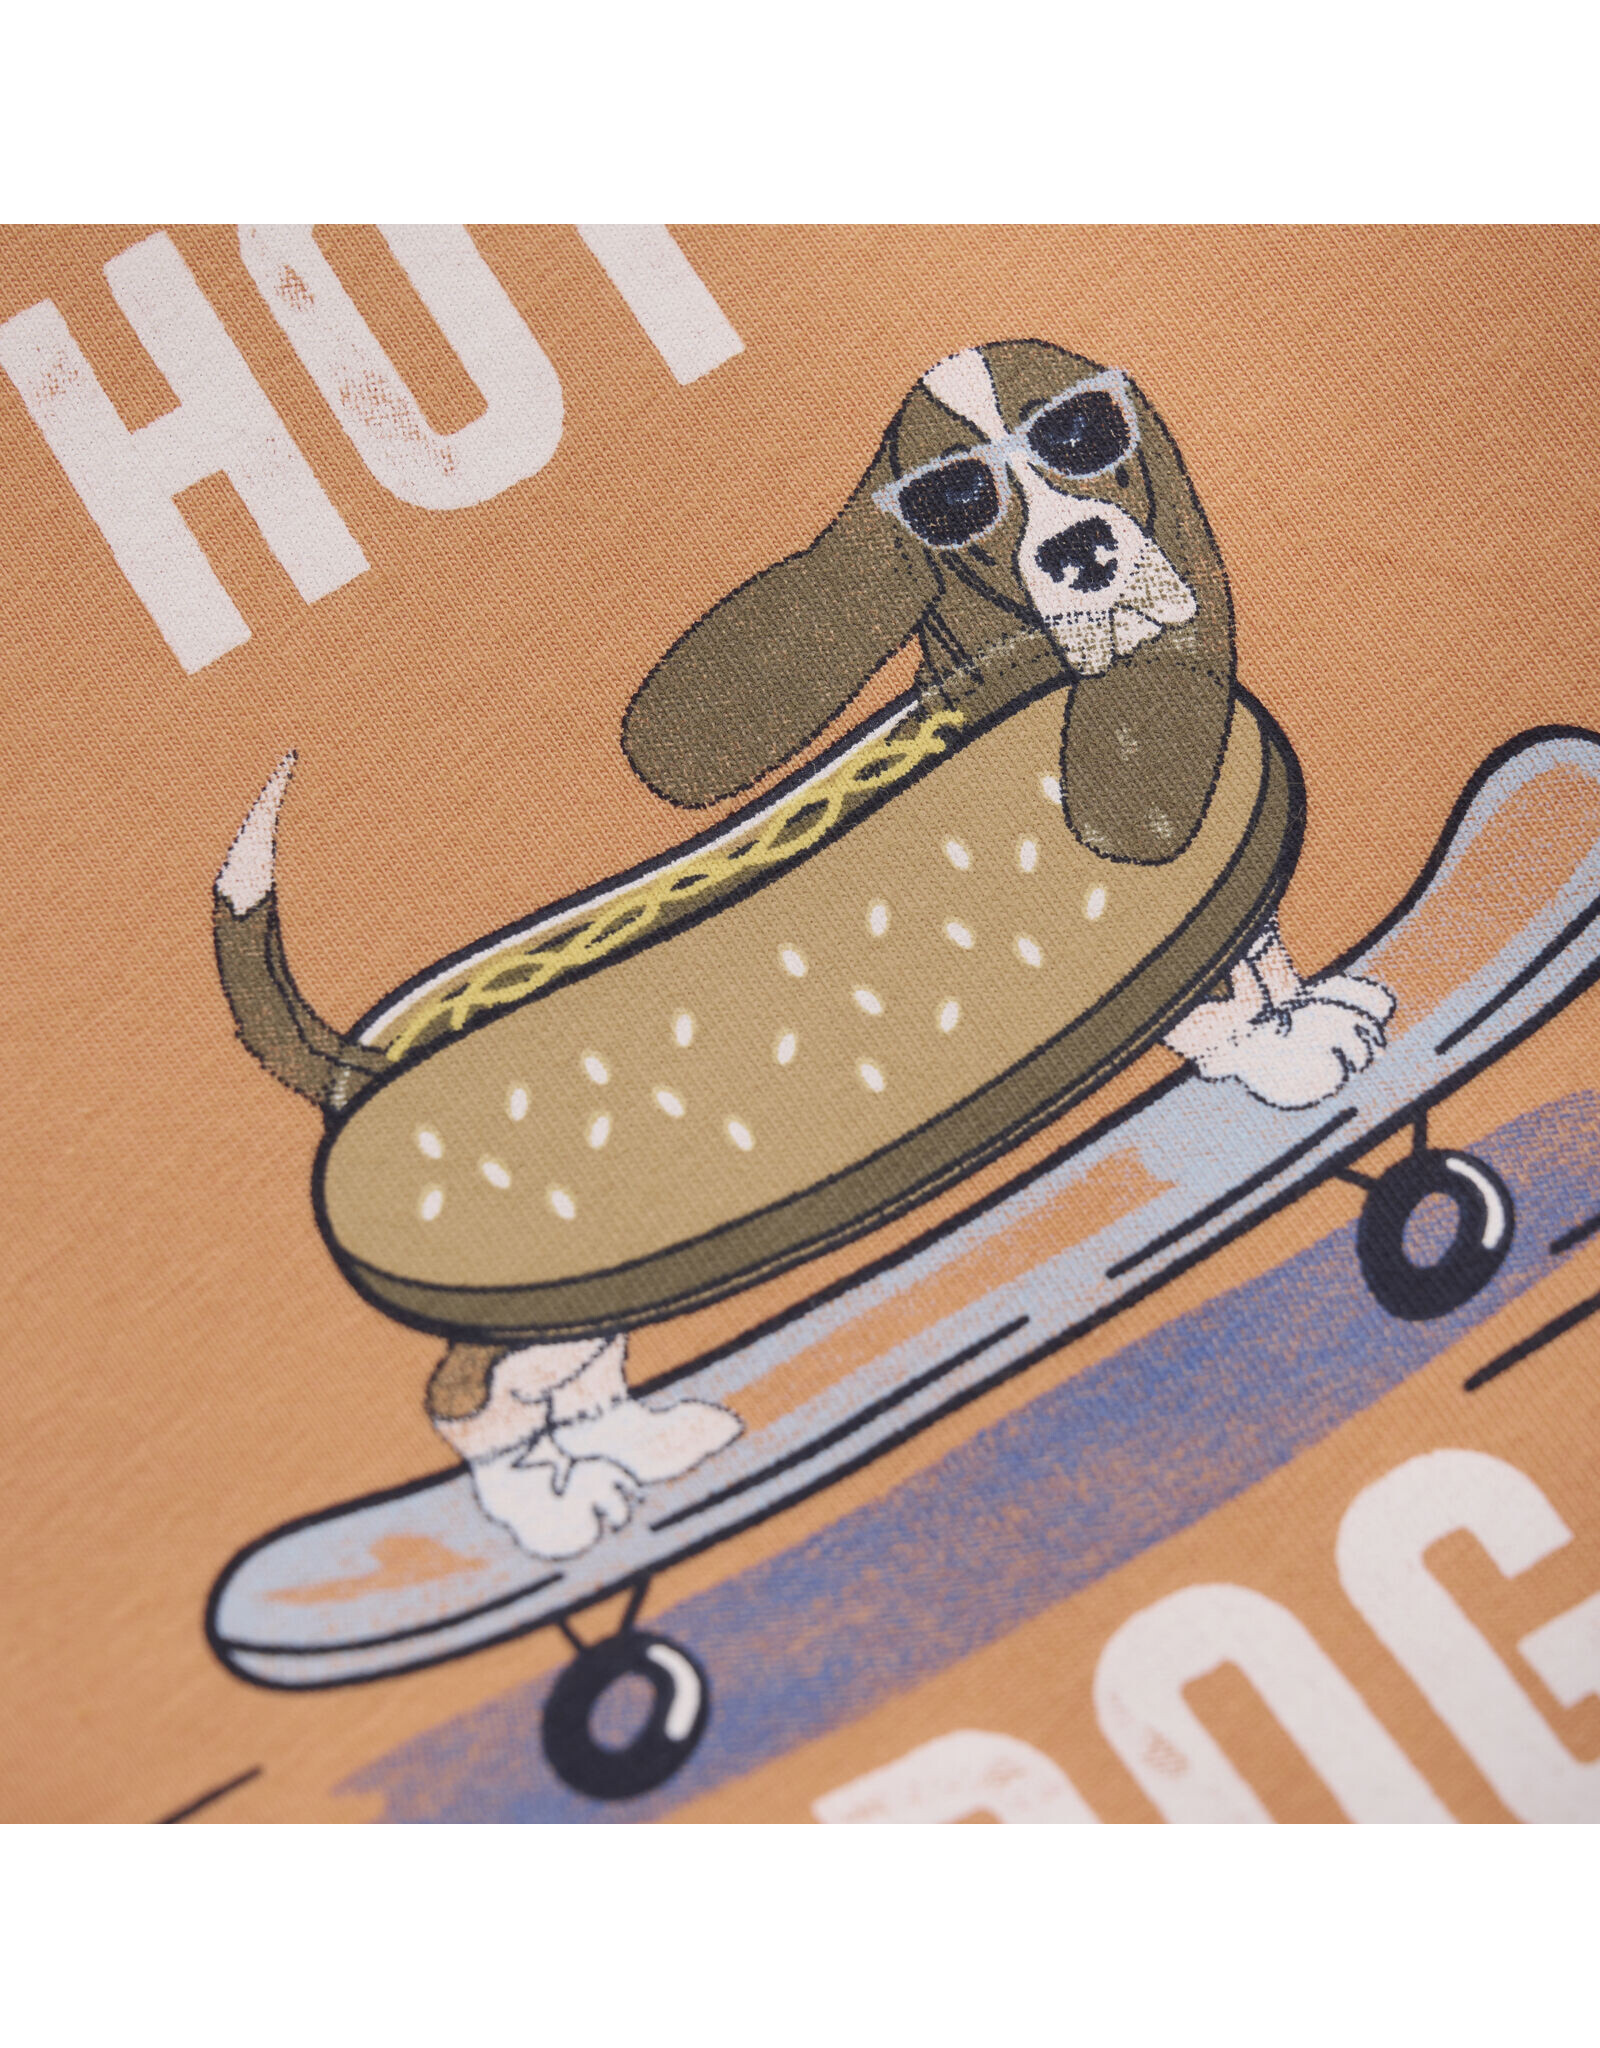 minymo t-shirt oranje hot dog